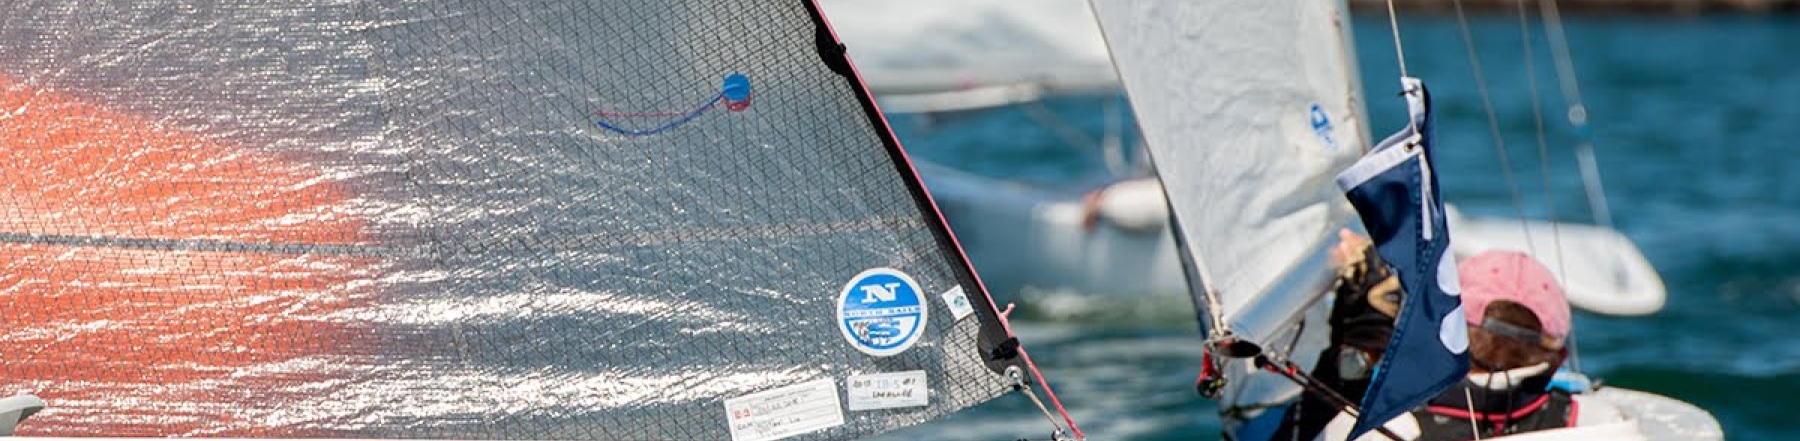 2.4mRs sailing at The Clagett Regatta in 2018